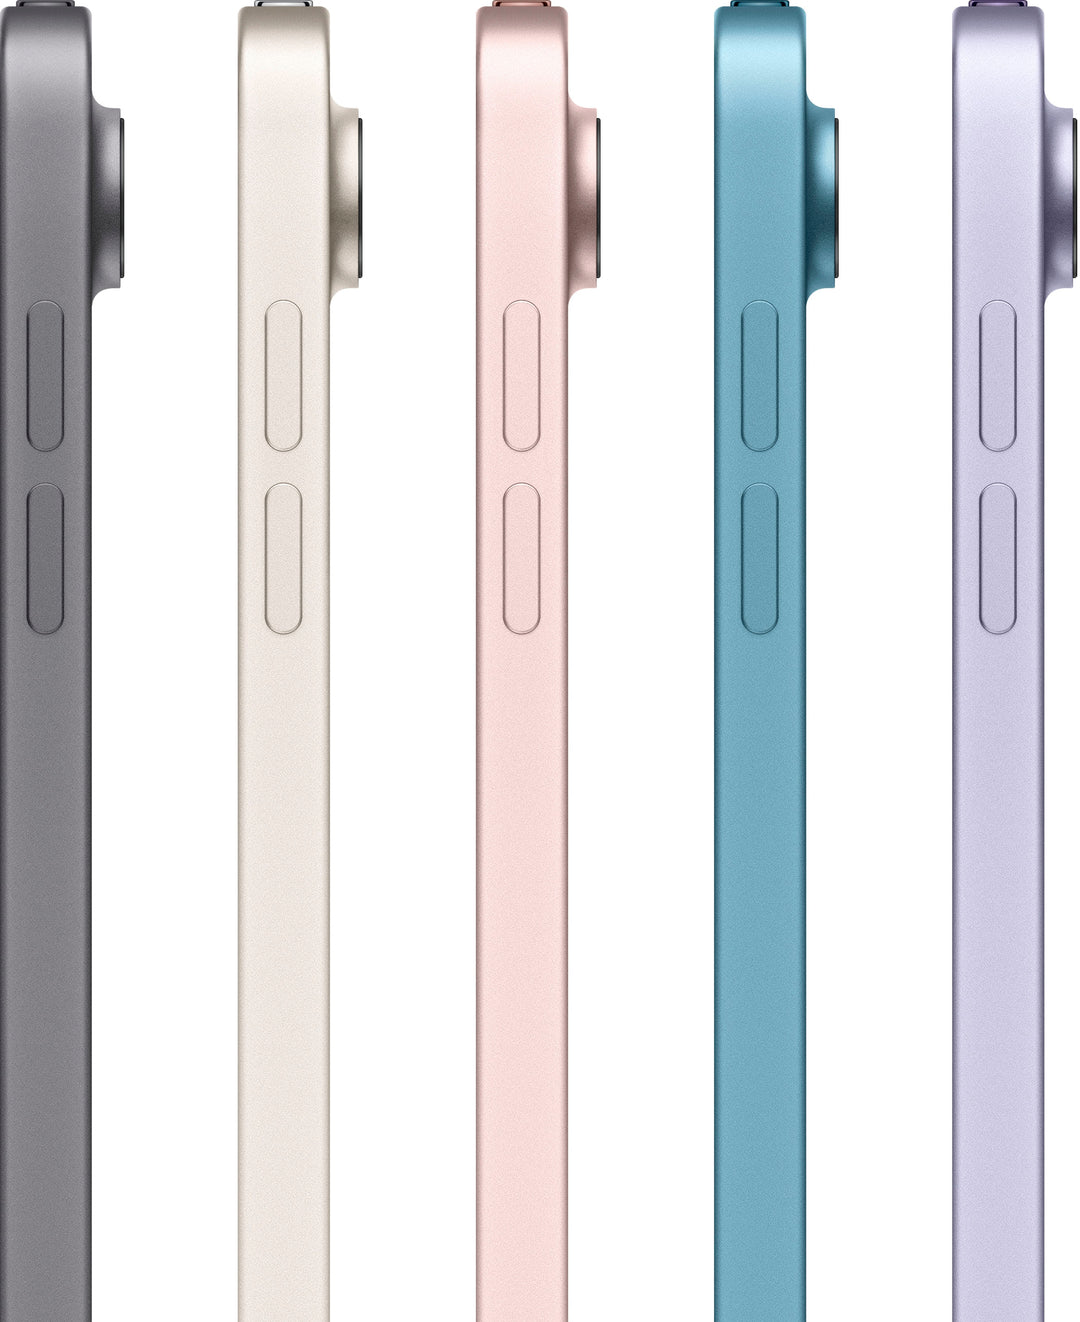 Apple - 10.9-Inch iPad Air - Latest Model - (5th Generation) with Wi-Fi - 256GB - Blue_6